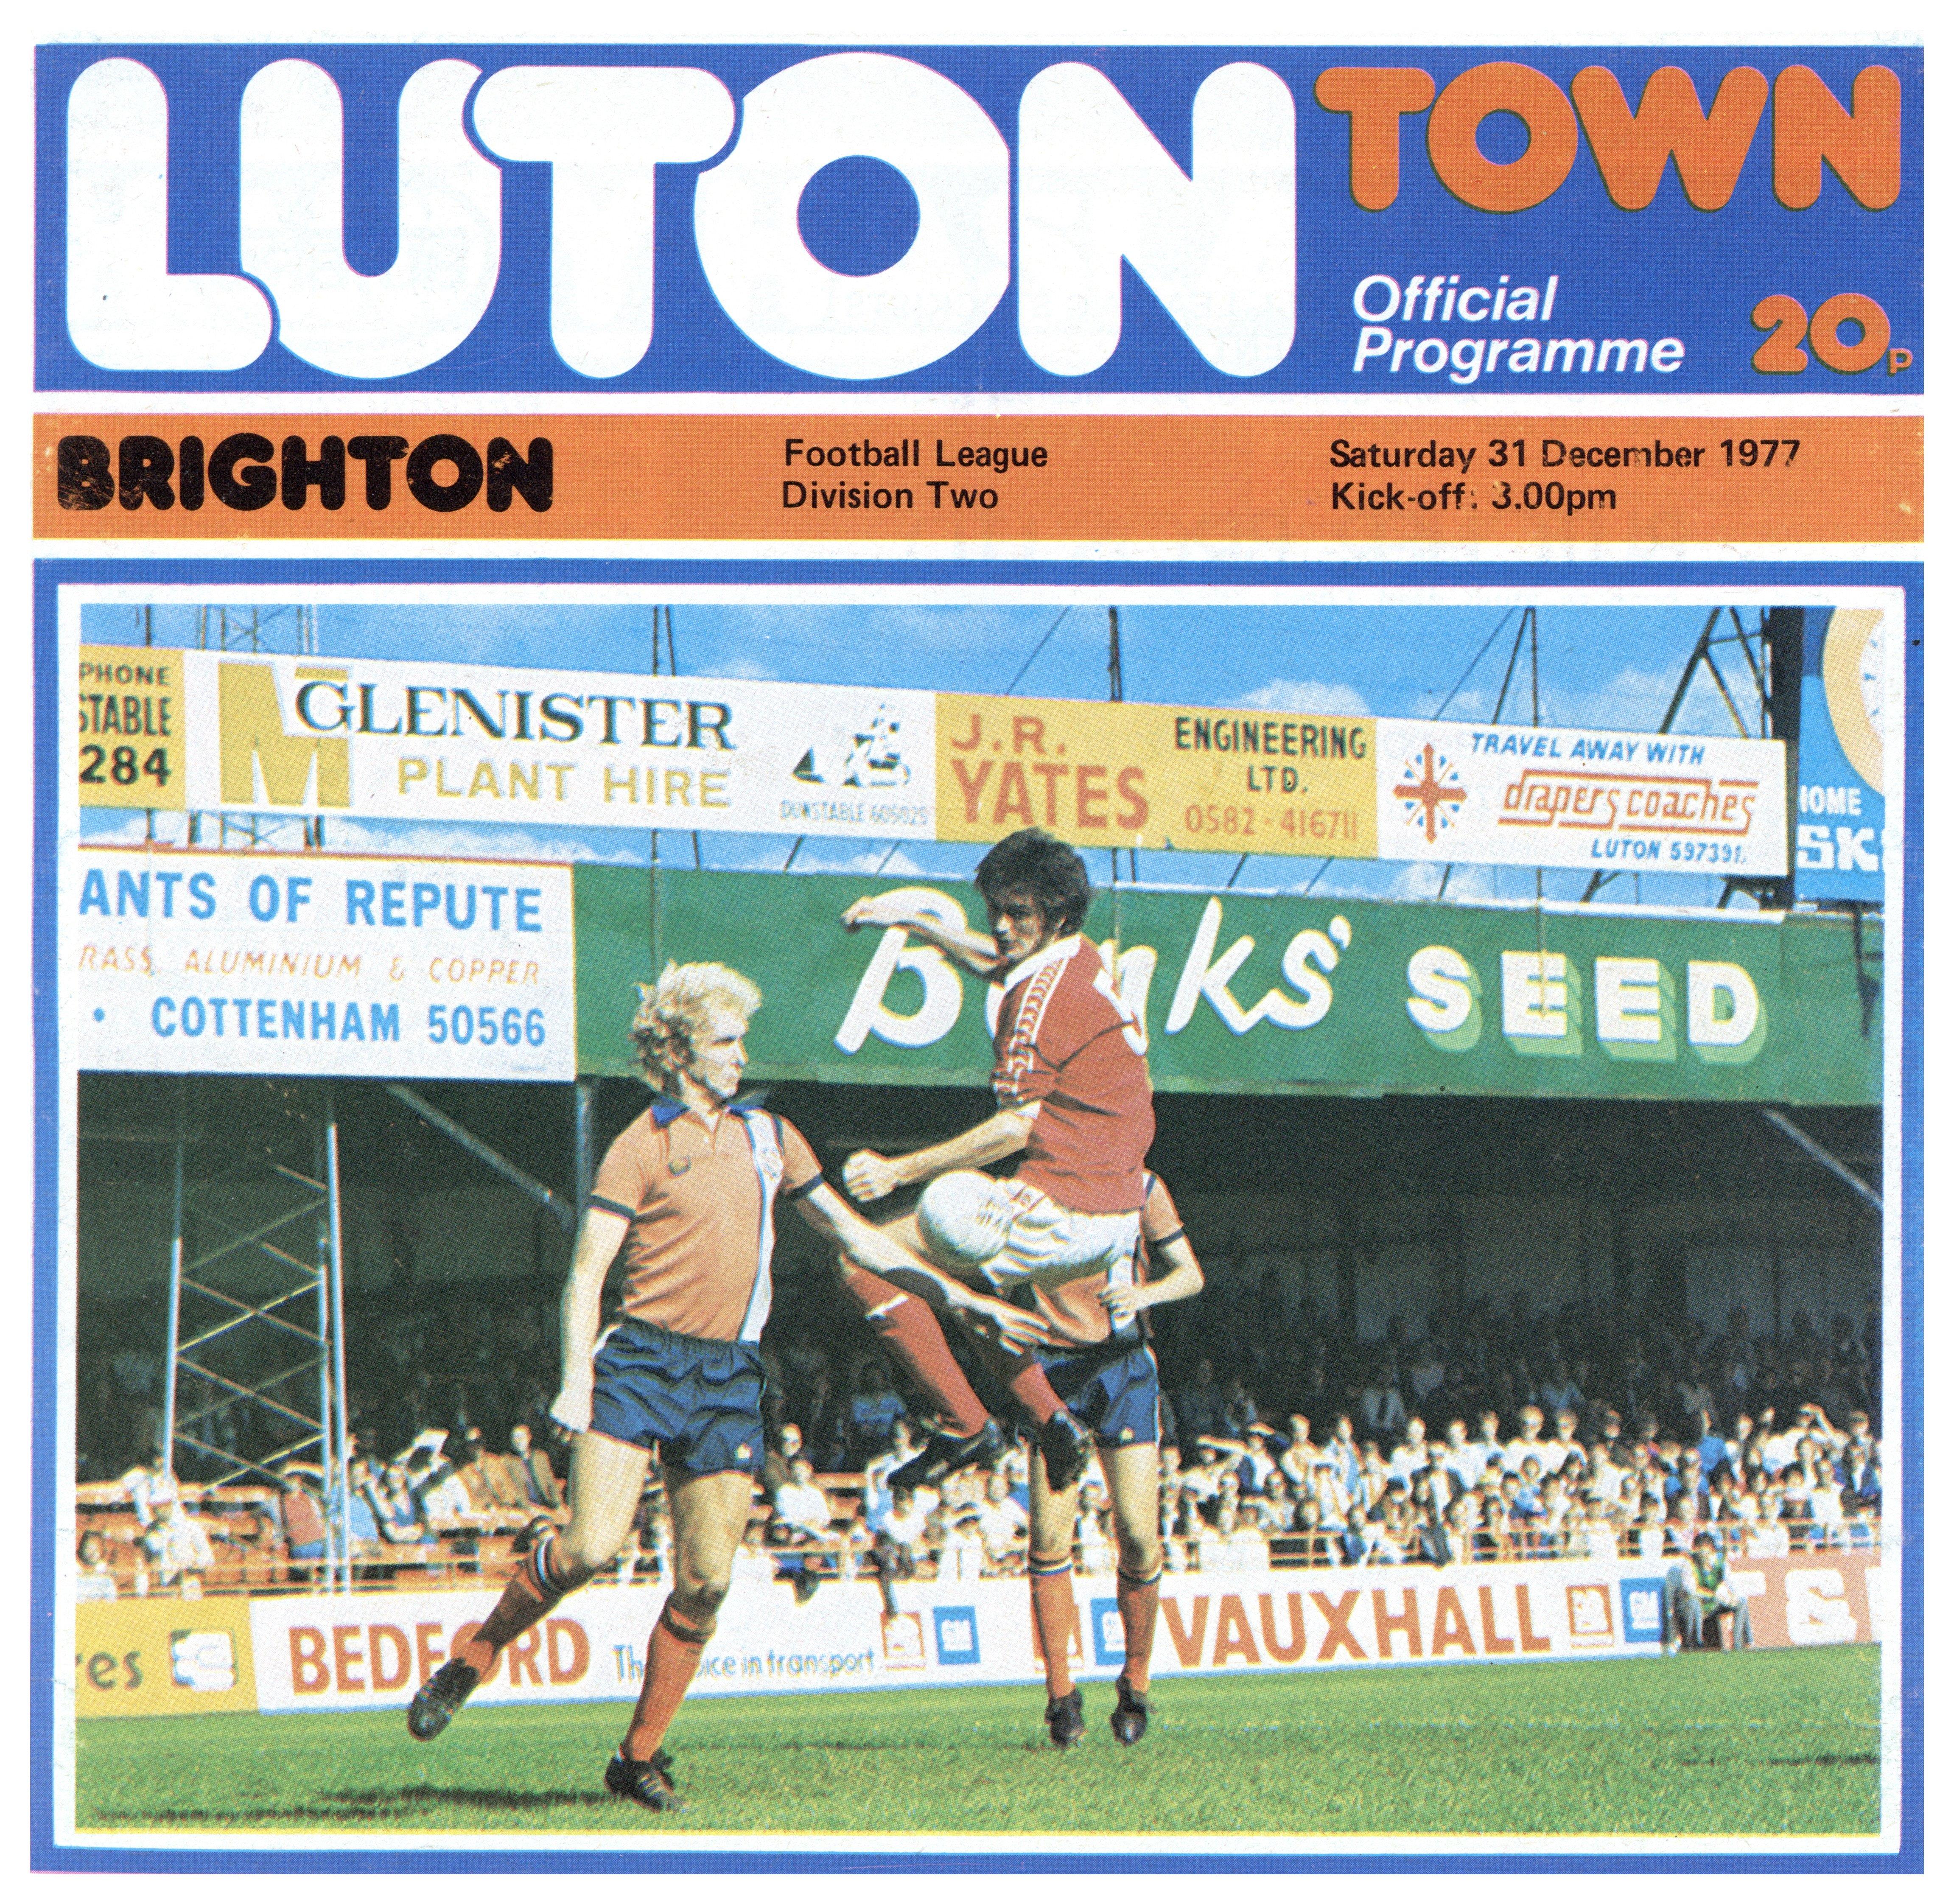 Programme: Luton Town vs Brighton & Hove Albion 1977/1978